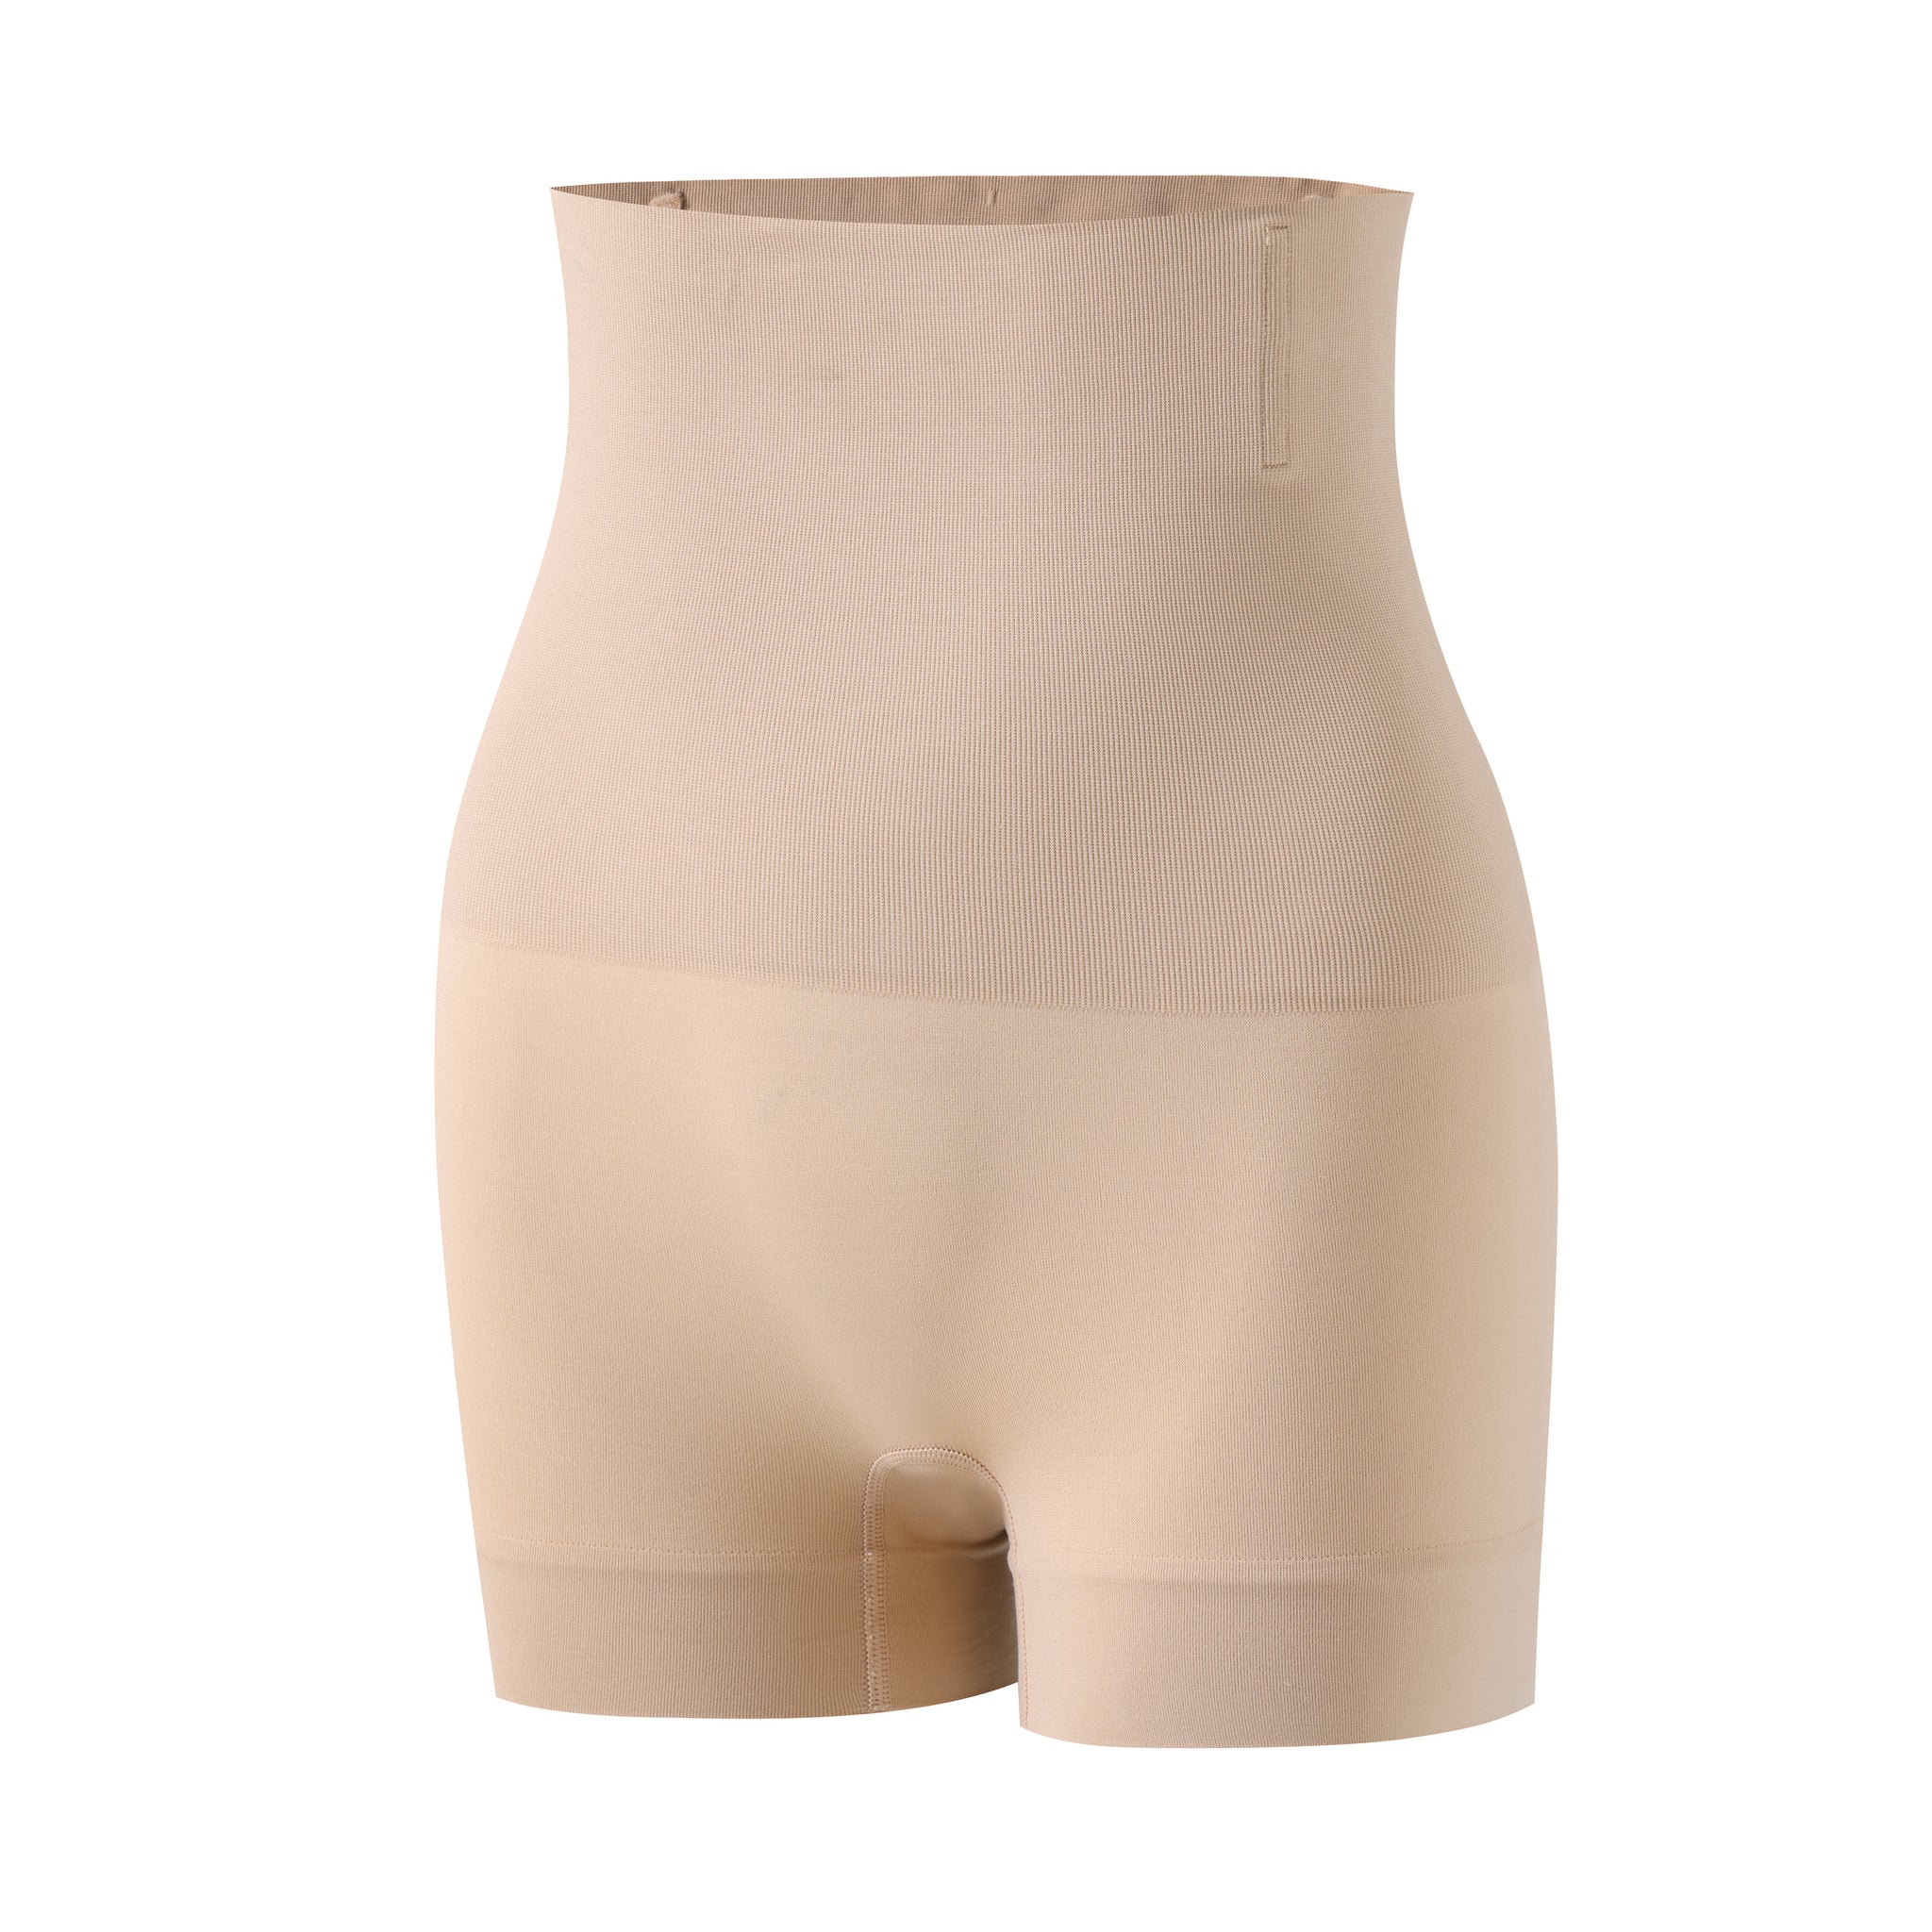  Werena Tummy Control Thong Shapewear For Women Seamless  Shaping Thong Panties Body Shaper Underwear